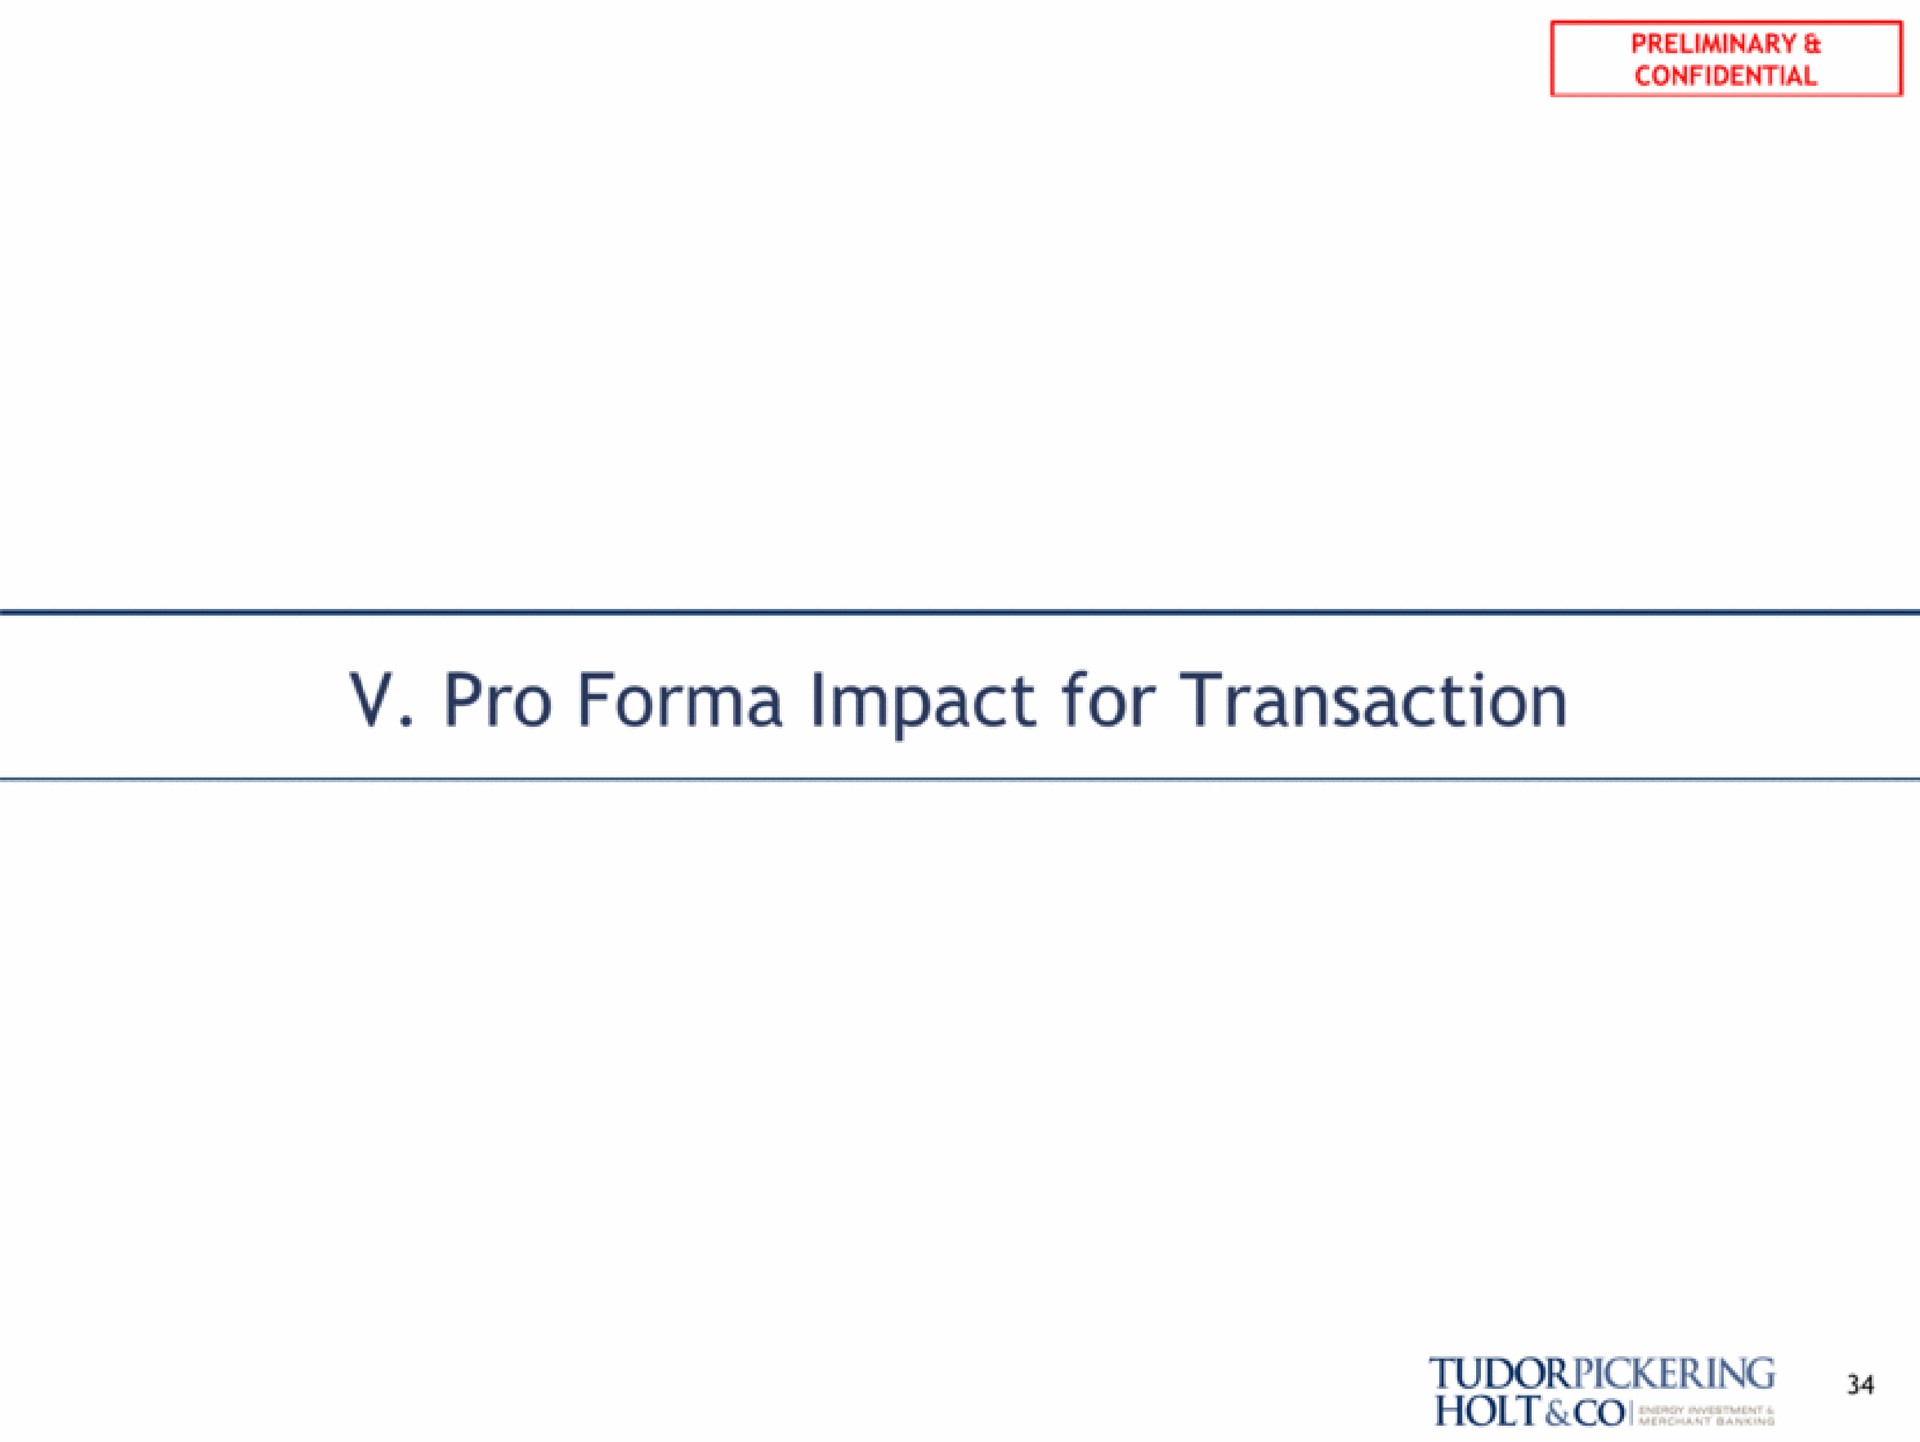 pro impact for transaction holt | Tudor, Pickering, Holt & Co